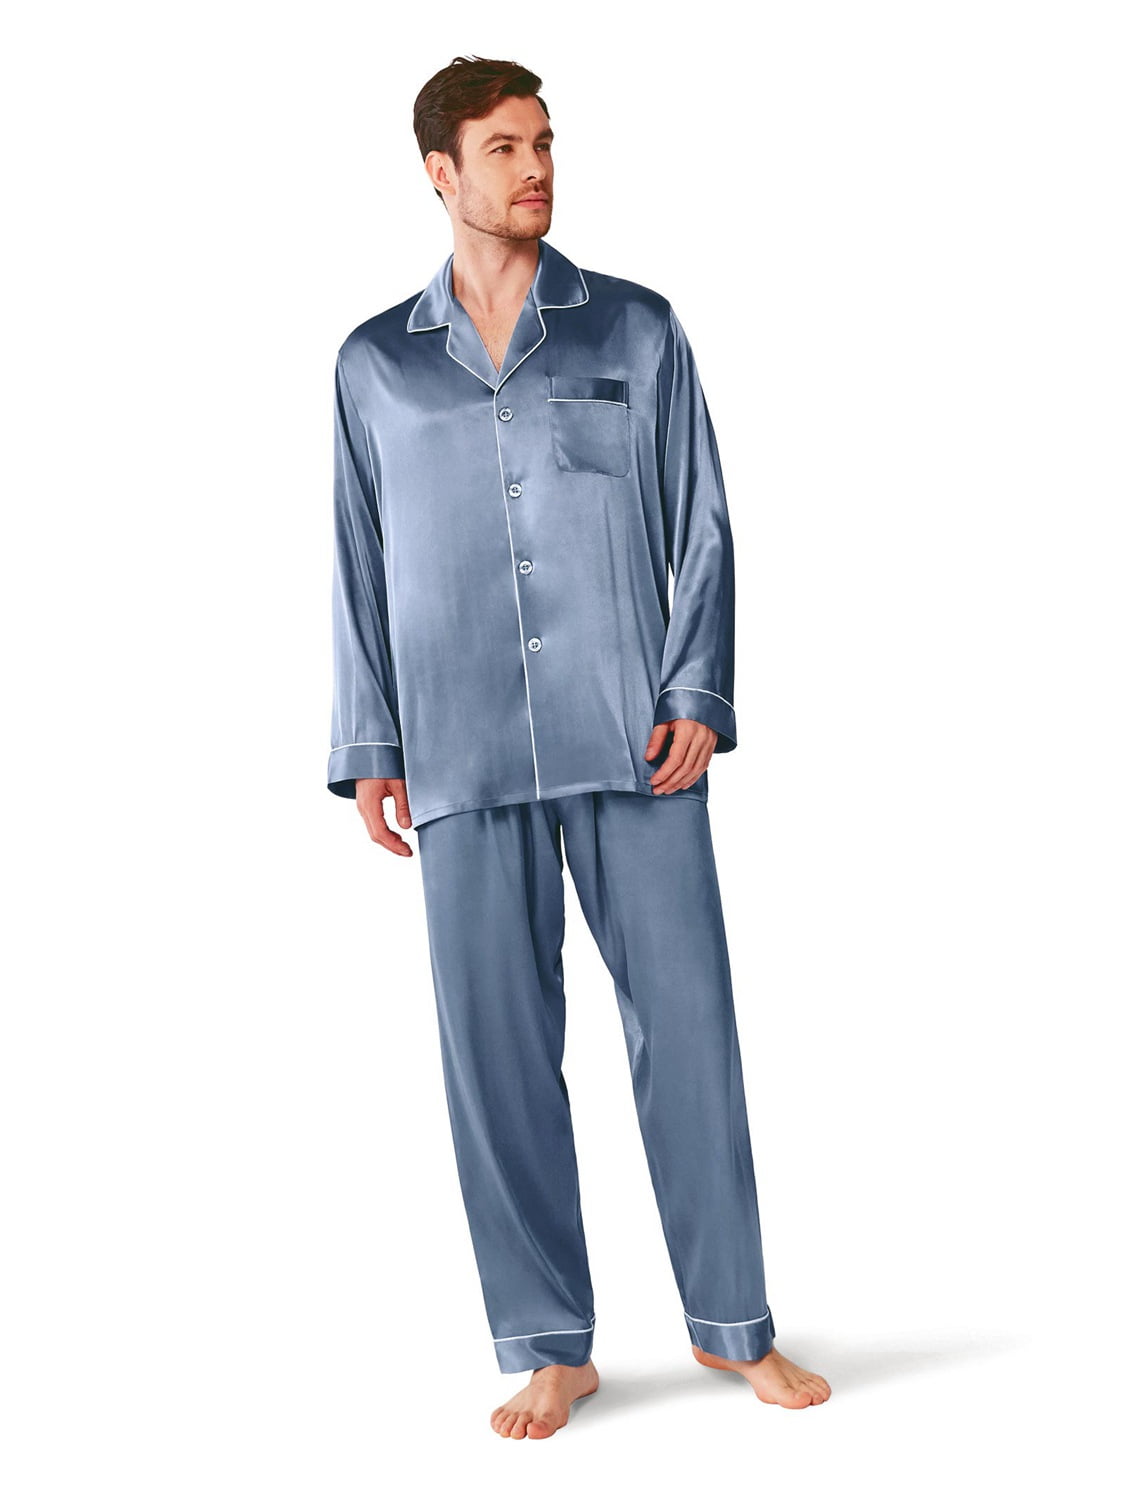 Long Sleeve Button Down PJ Set with Pocket Sleepwear Loungewear M-XXL SIORO Mens Silk Satin Pajama Sets